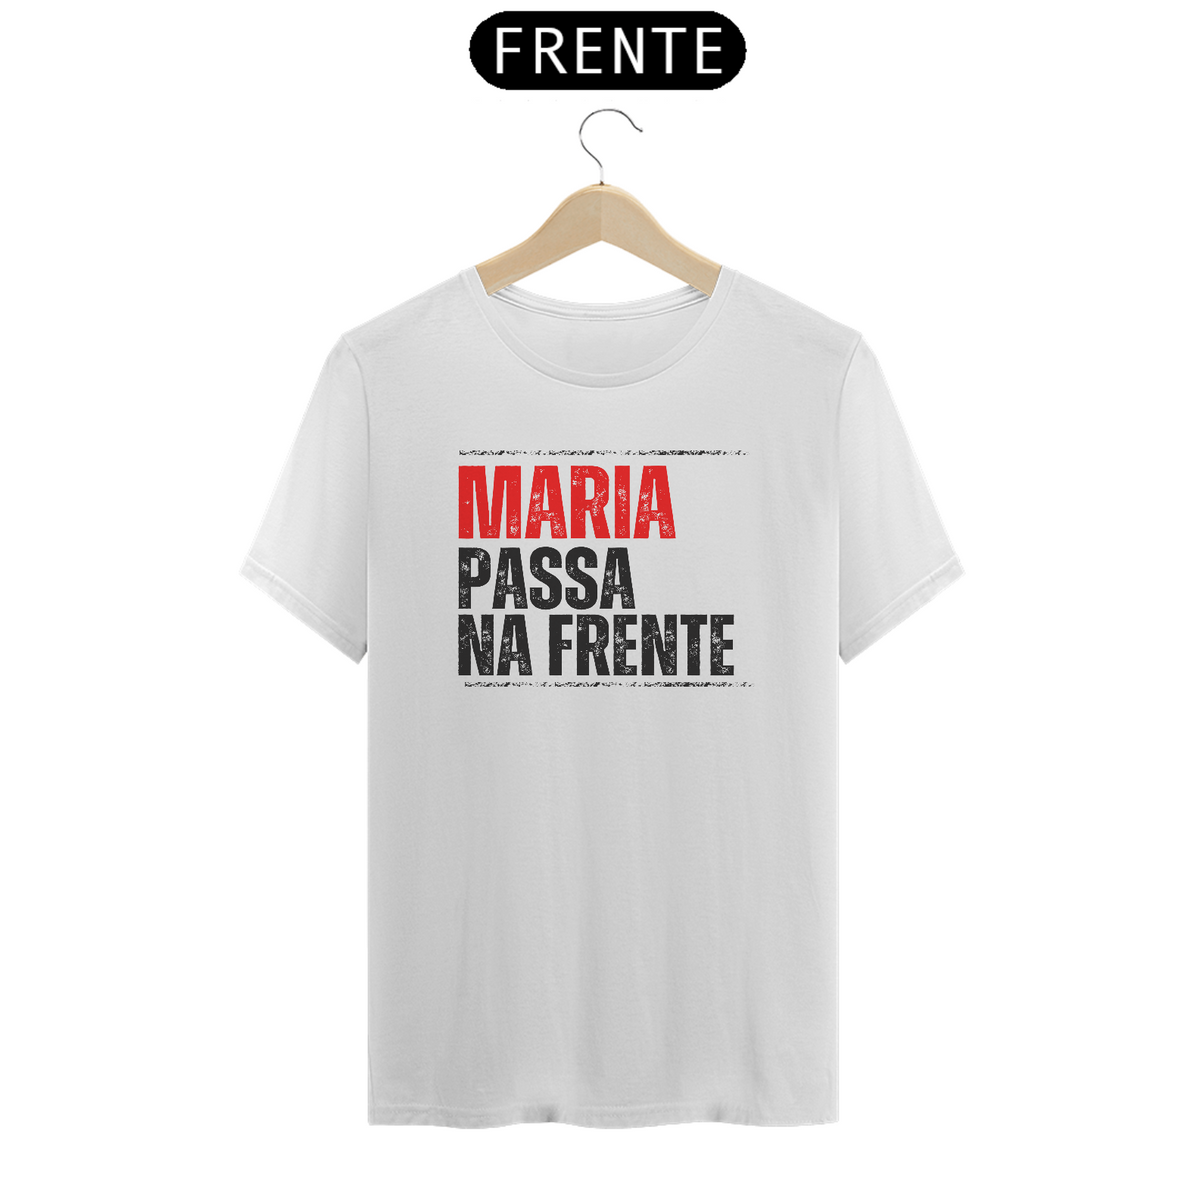 Nome do produto: Camiseta Maria Passa na Frente